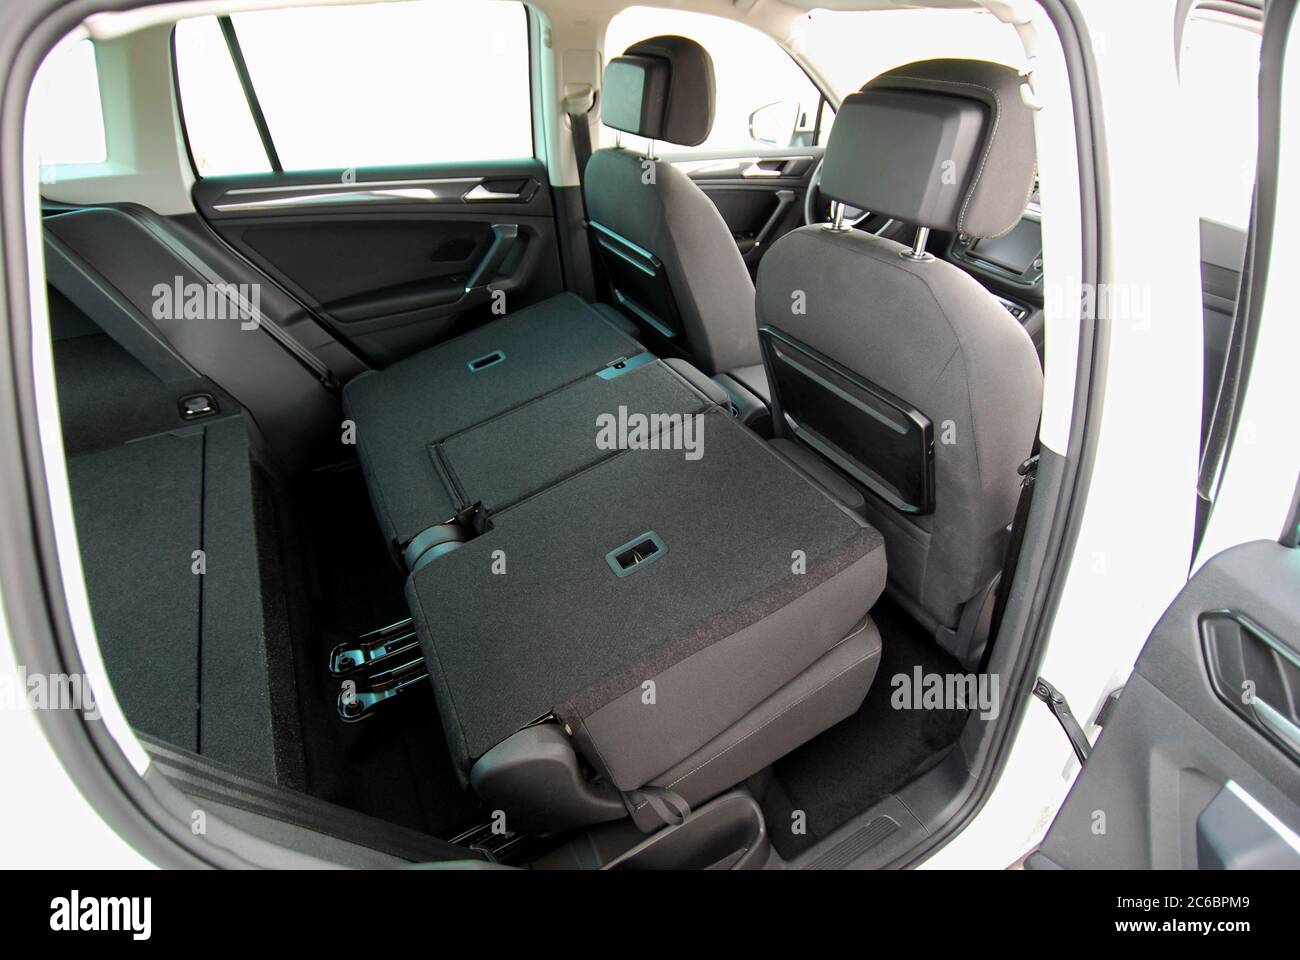 https://c8.alamy.com/comp/2C6BPM9/folded-rear-seat-of-the-car-down-rear-seats-of-a-modern-passenger-car-2C6BPM9.jpg